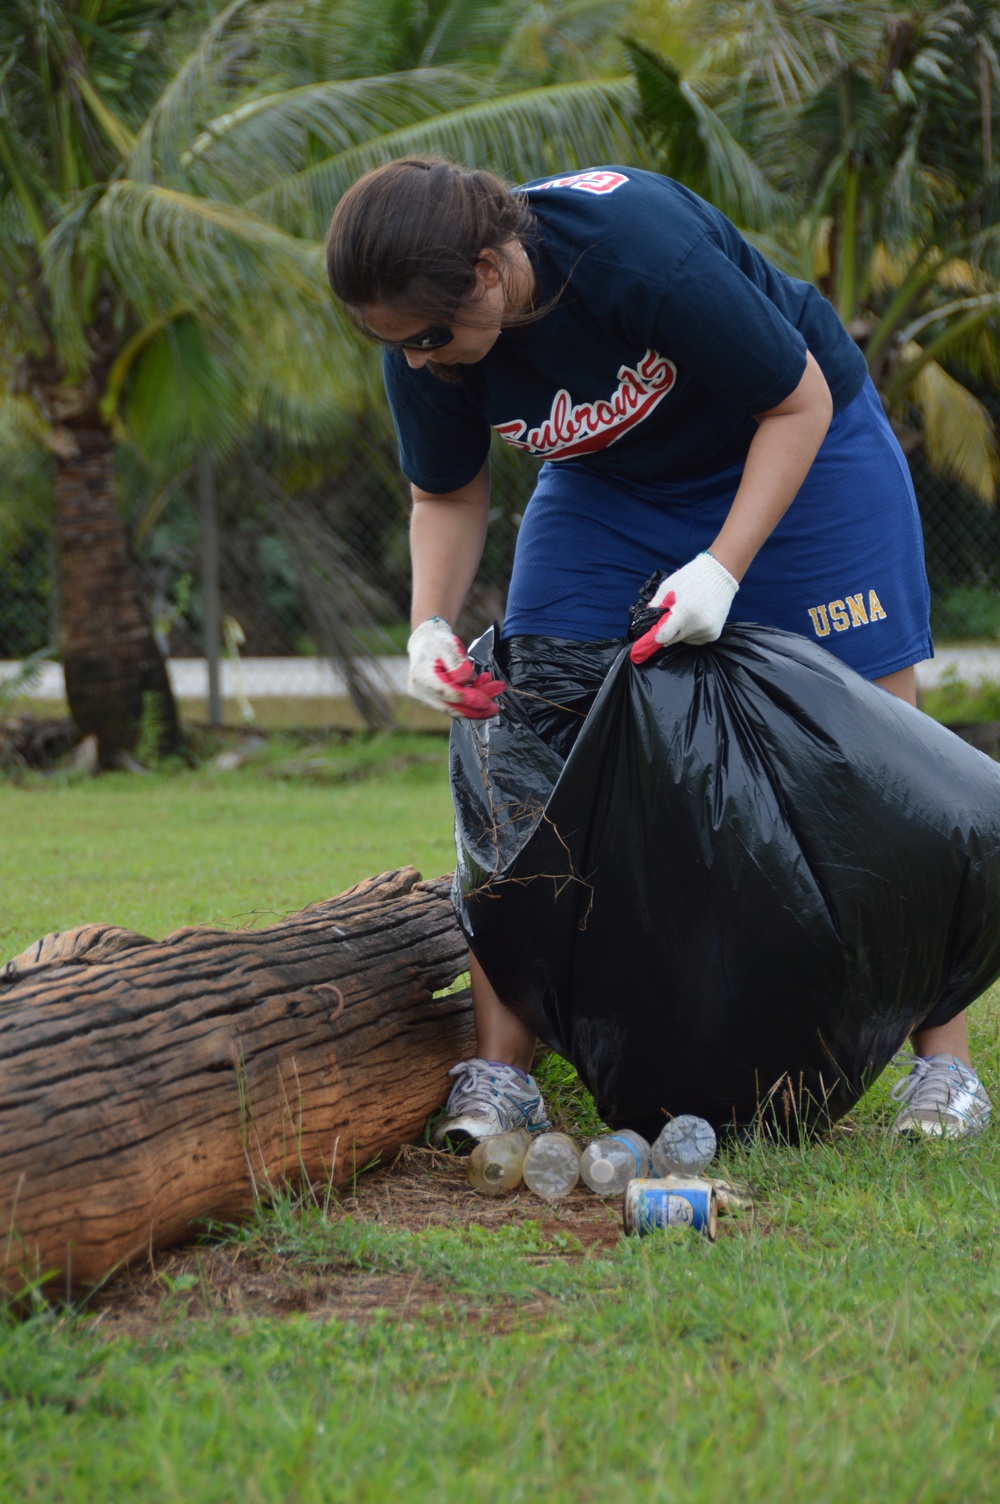 CSS-15 Sailor picks up trash at Eagles Field, Guam, Feb. 3